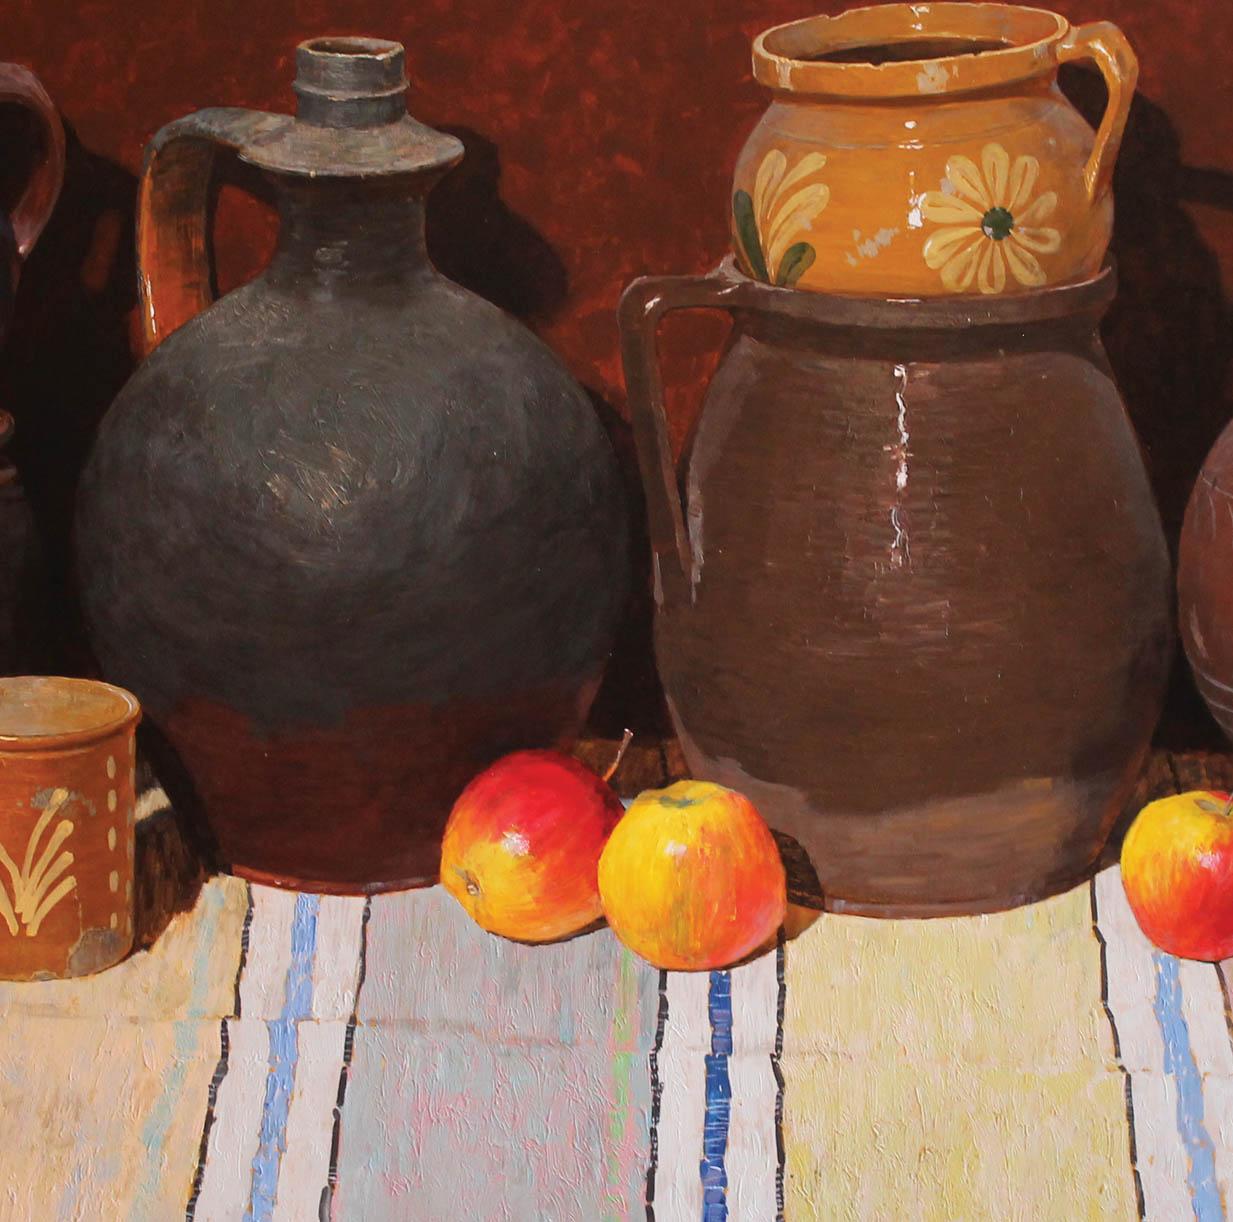 Ceramic and Apples - Impressionist Painting by Vladimir Kovalov